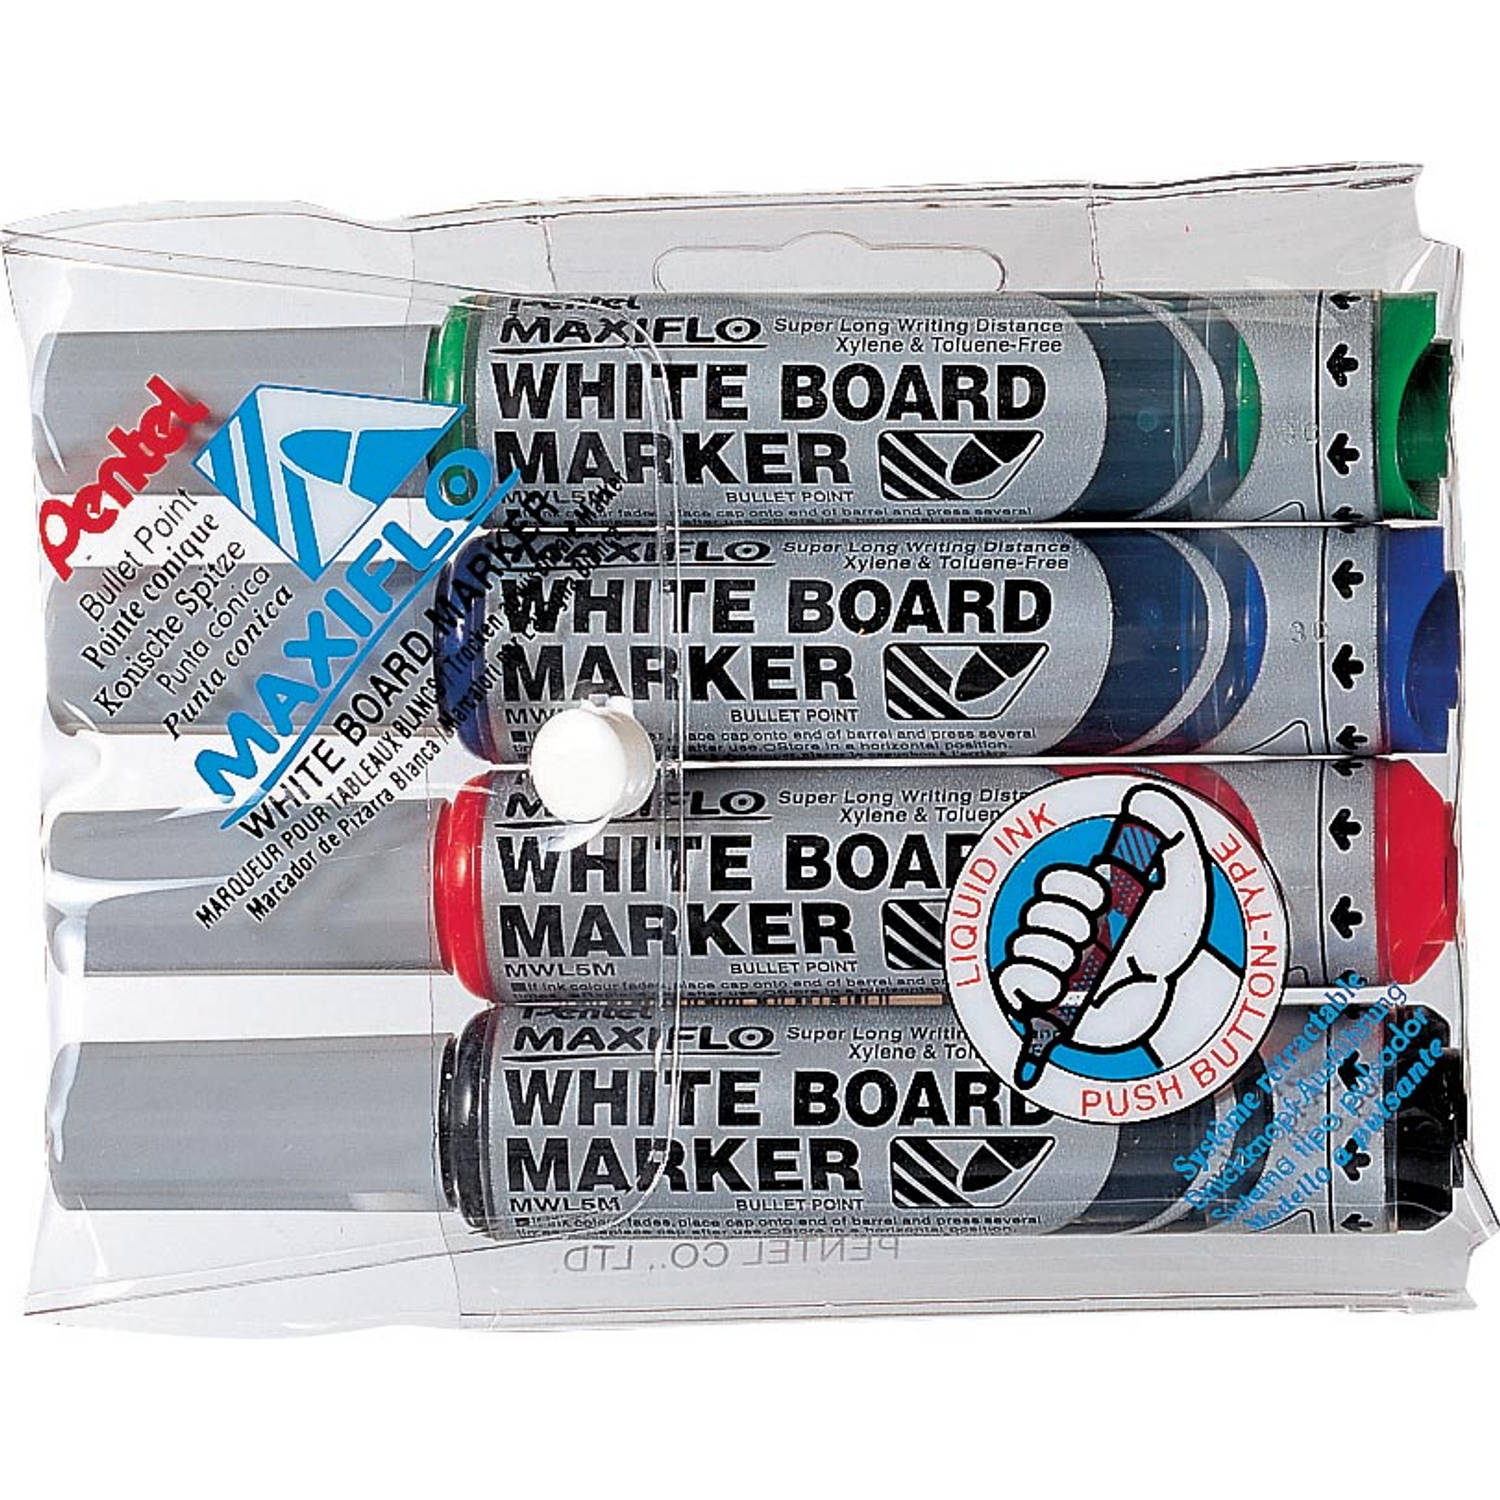 Viltstift Pentel MWL5M Maxiflo whiteboard assorti 3mm 4stuks